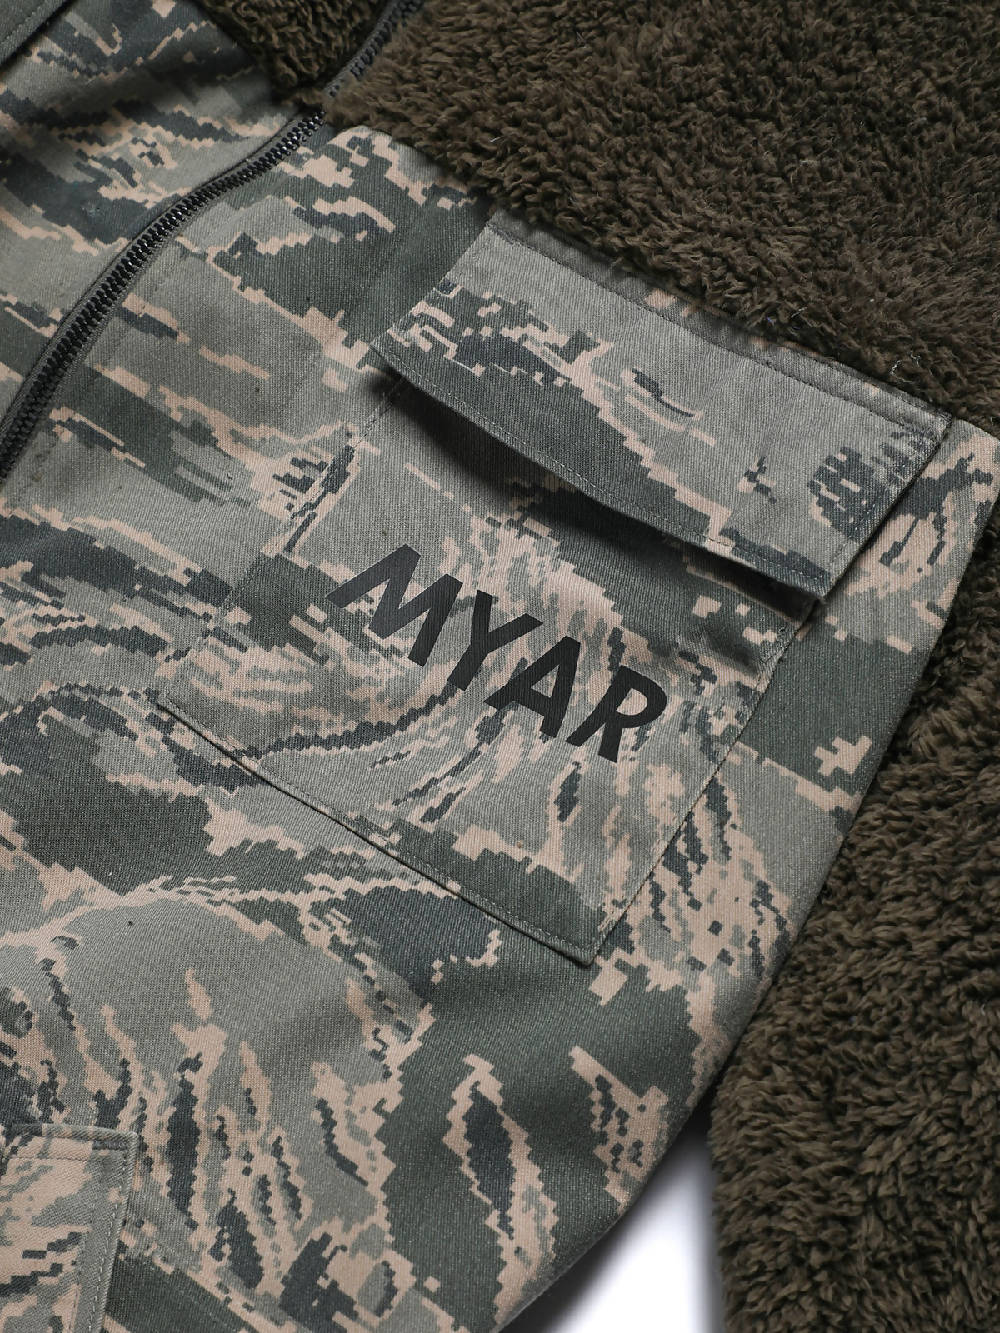 Myar Usj9C Navy Working Uniform Grey Jacket